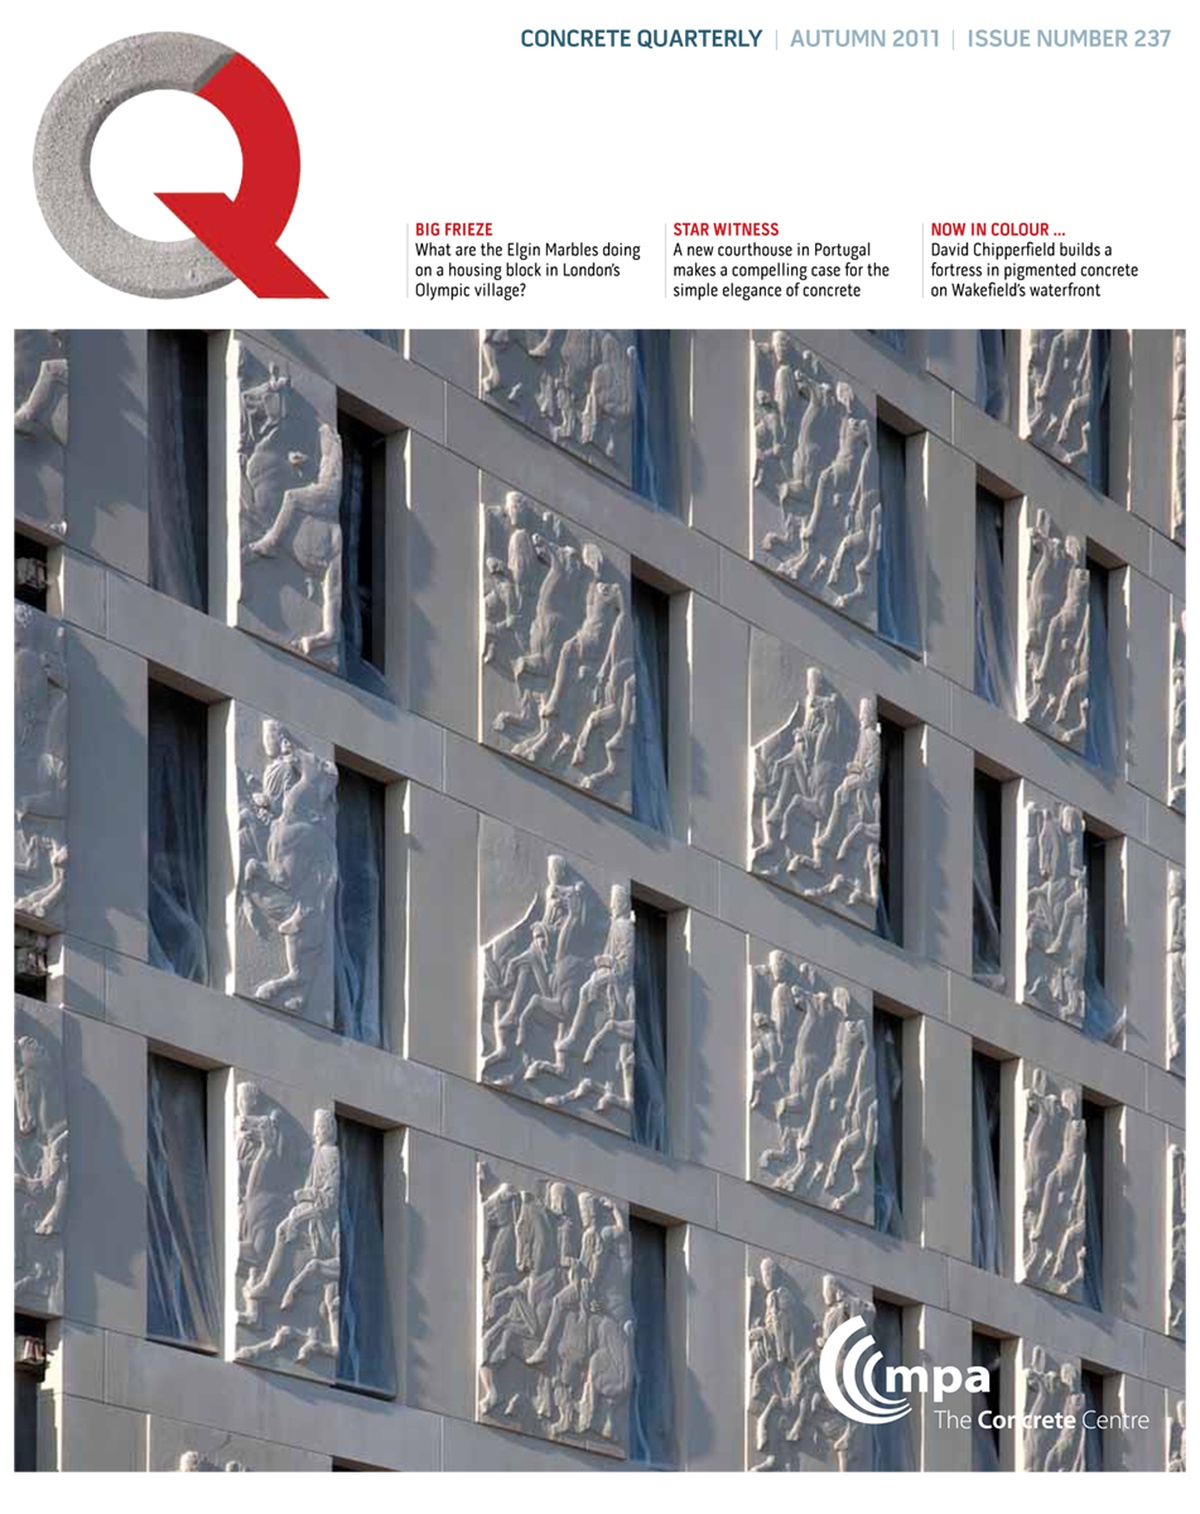 Classical Good Looks - Concrete Quarterly